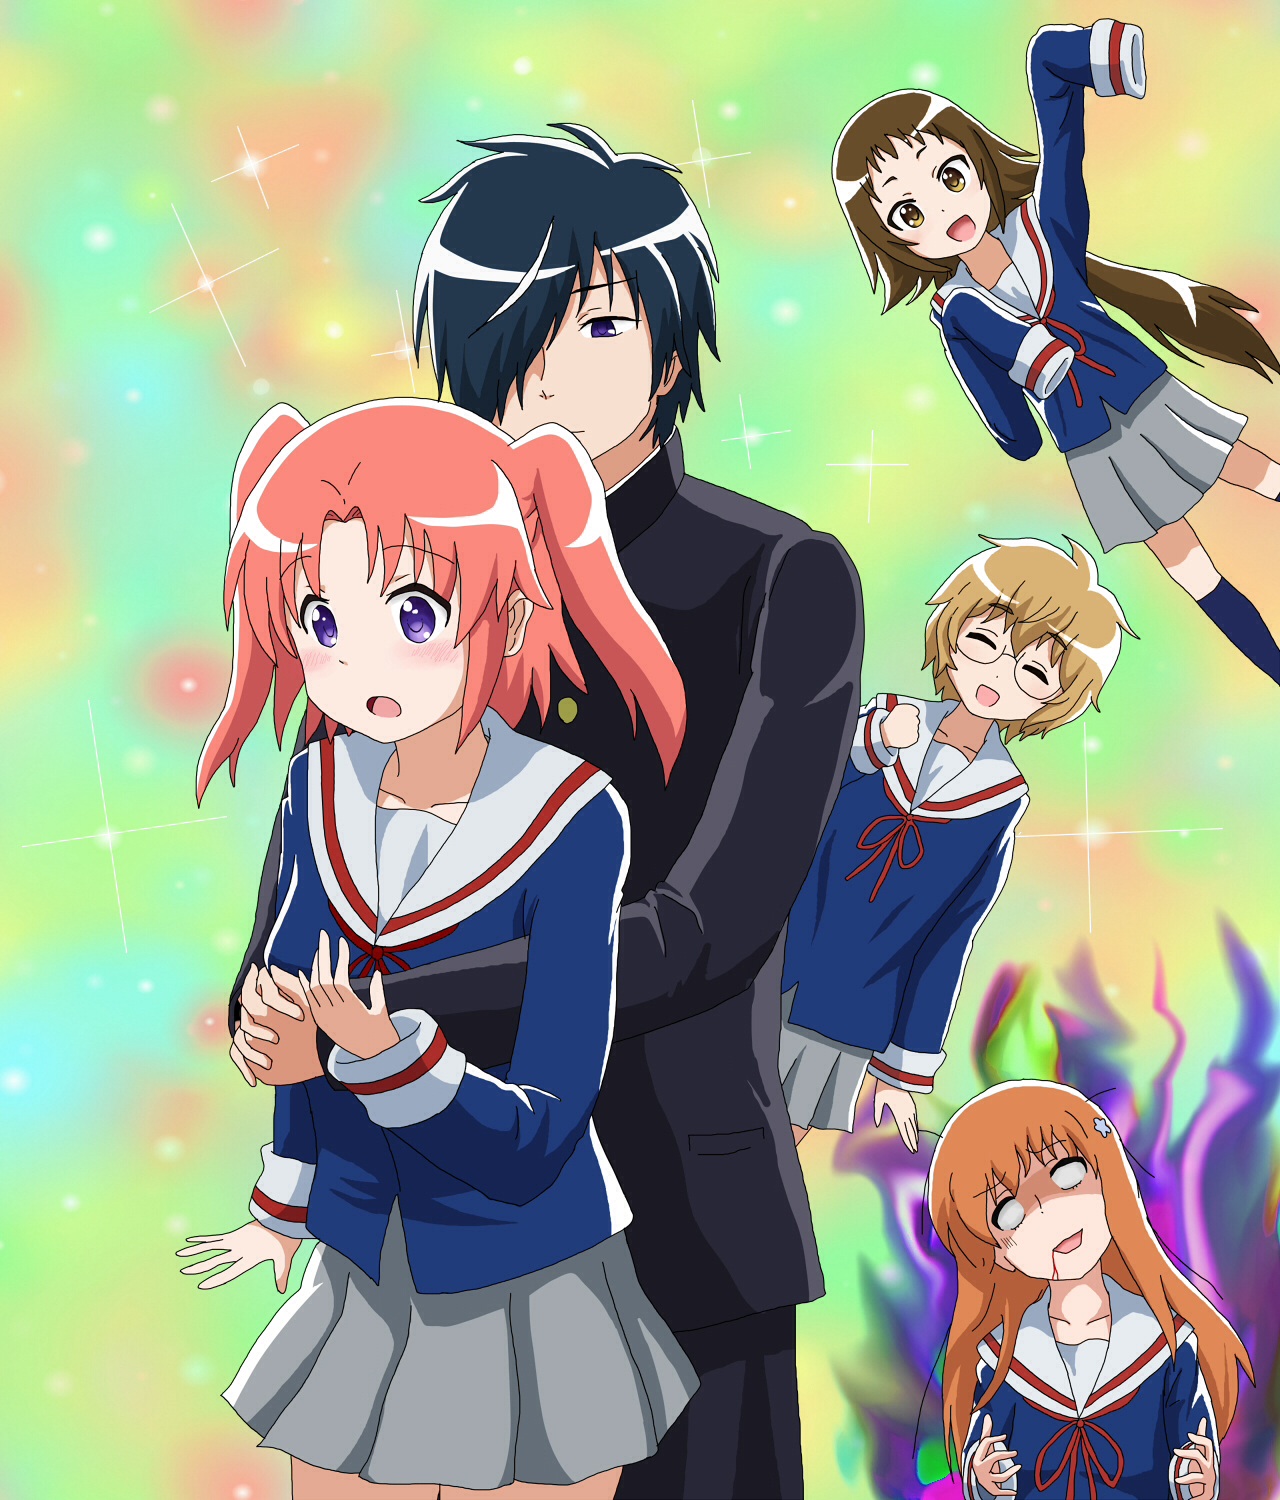 Anime For Life - Anime: Mikakunin De ShinKoukei Genre's